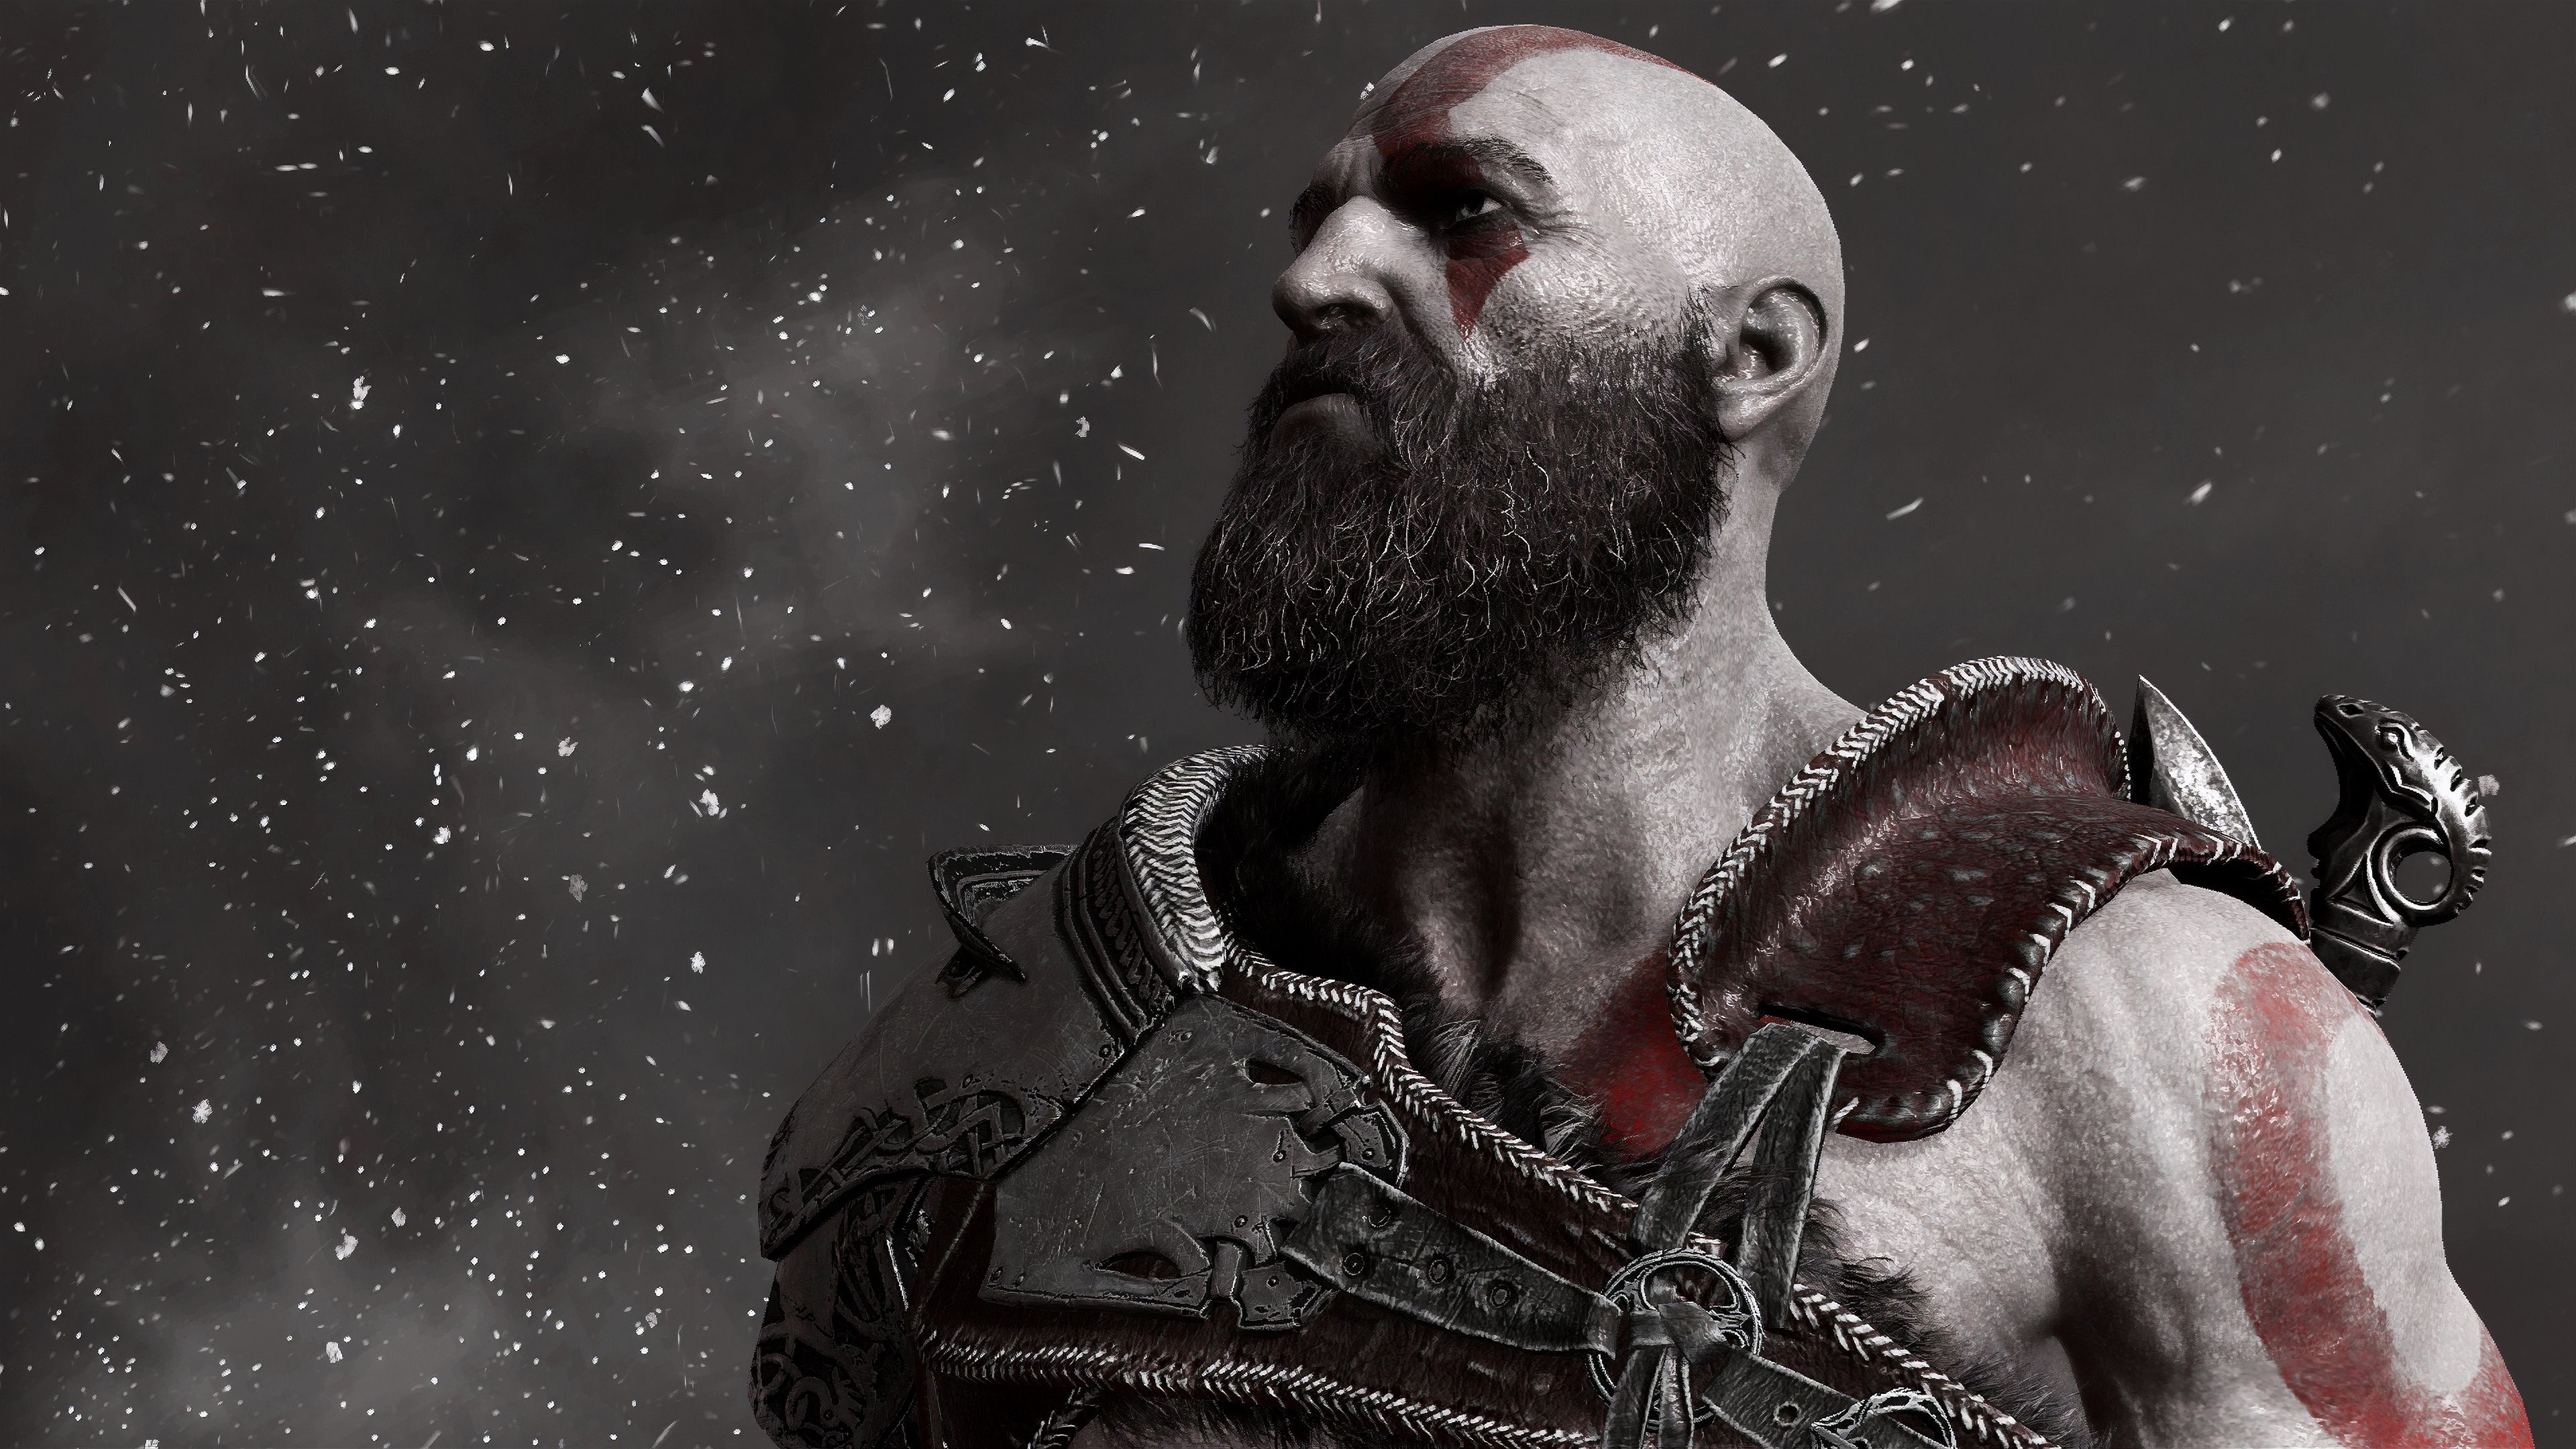 Kratos full HD wallpaper, Stunning game artwork, Powerful gaming character, Console gaming icon, 3840x2160 4K Desktop